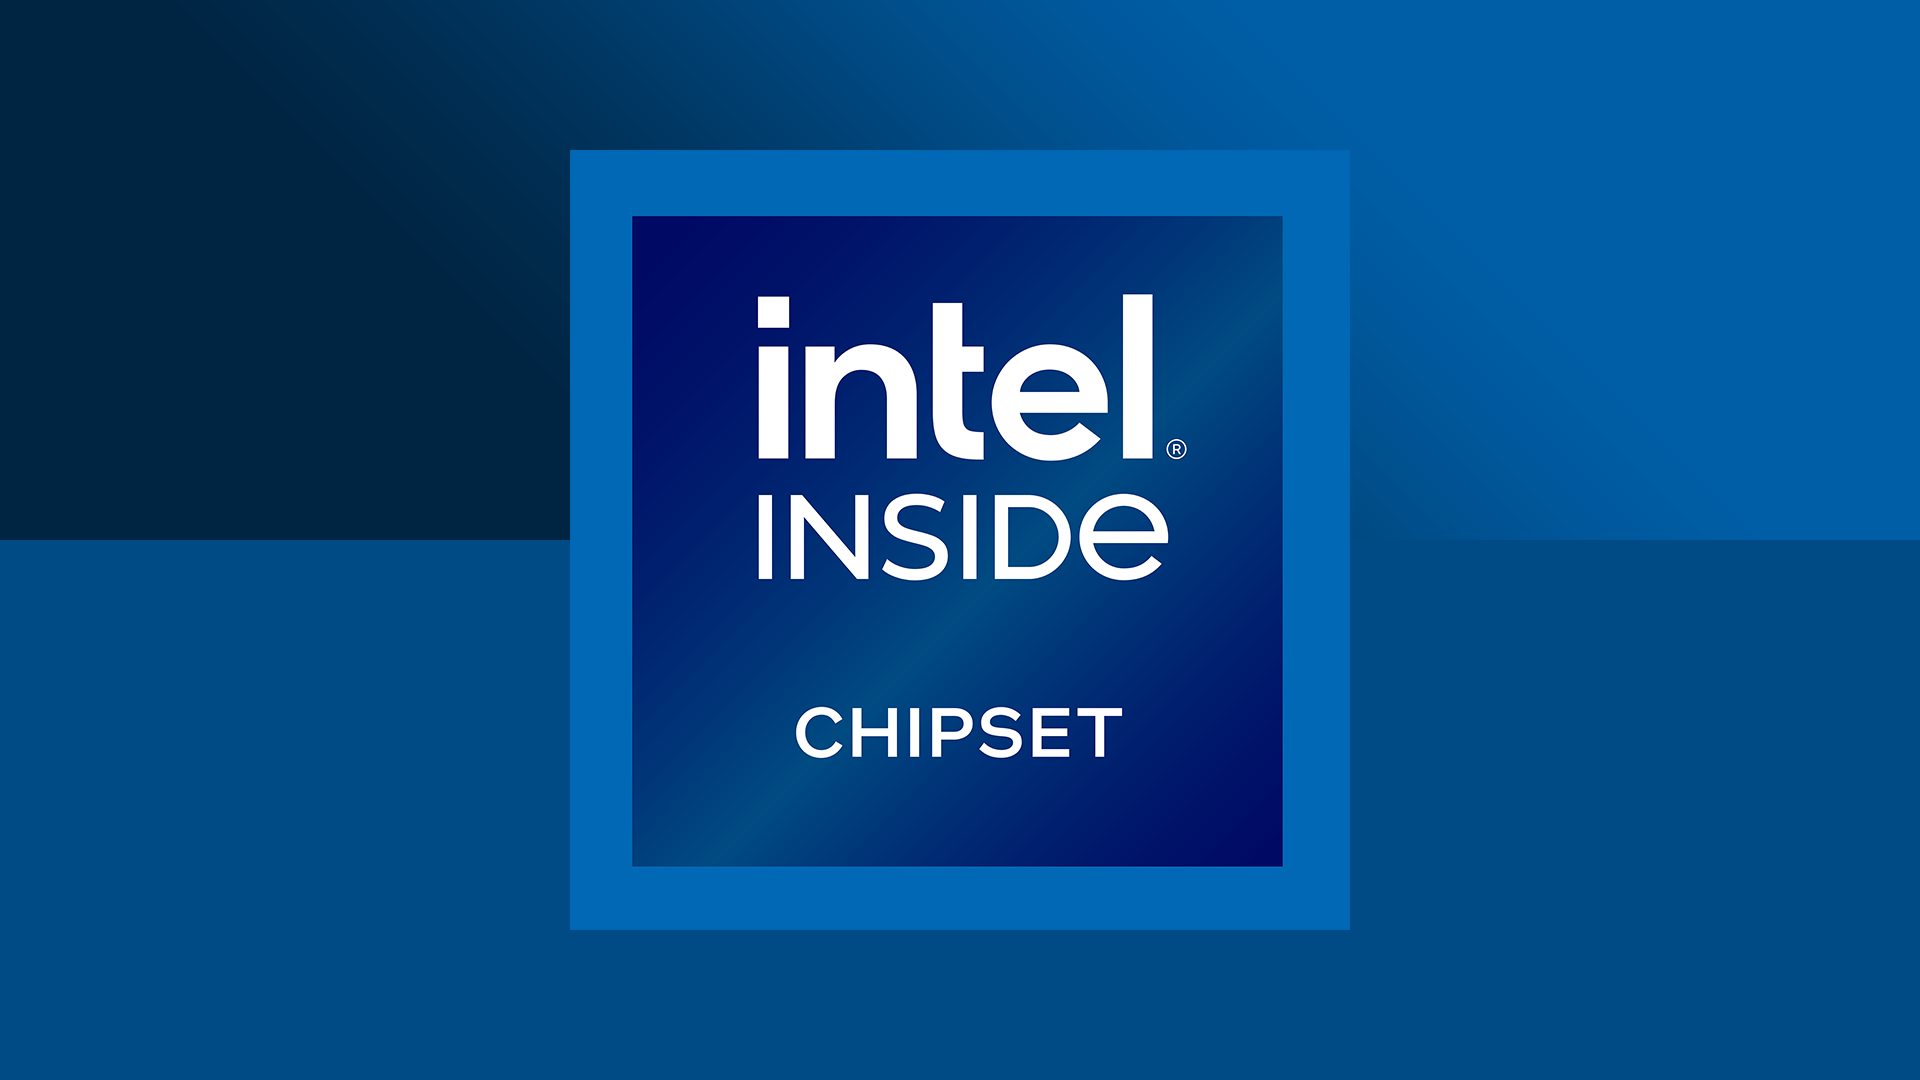 Intel Chipset Driver. 6 Series Chipset. Chipset Family. 10 Series Chipset. Intel 6 series chipset